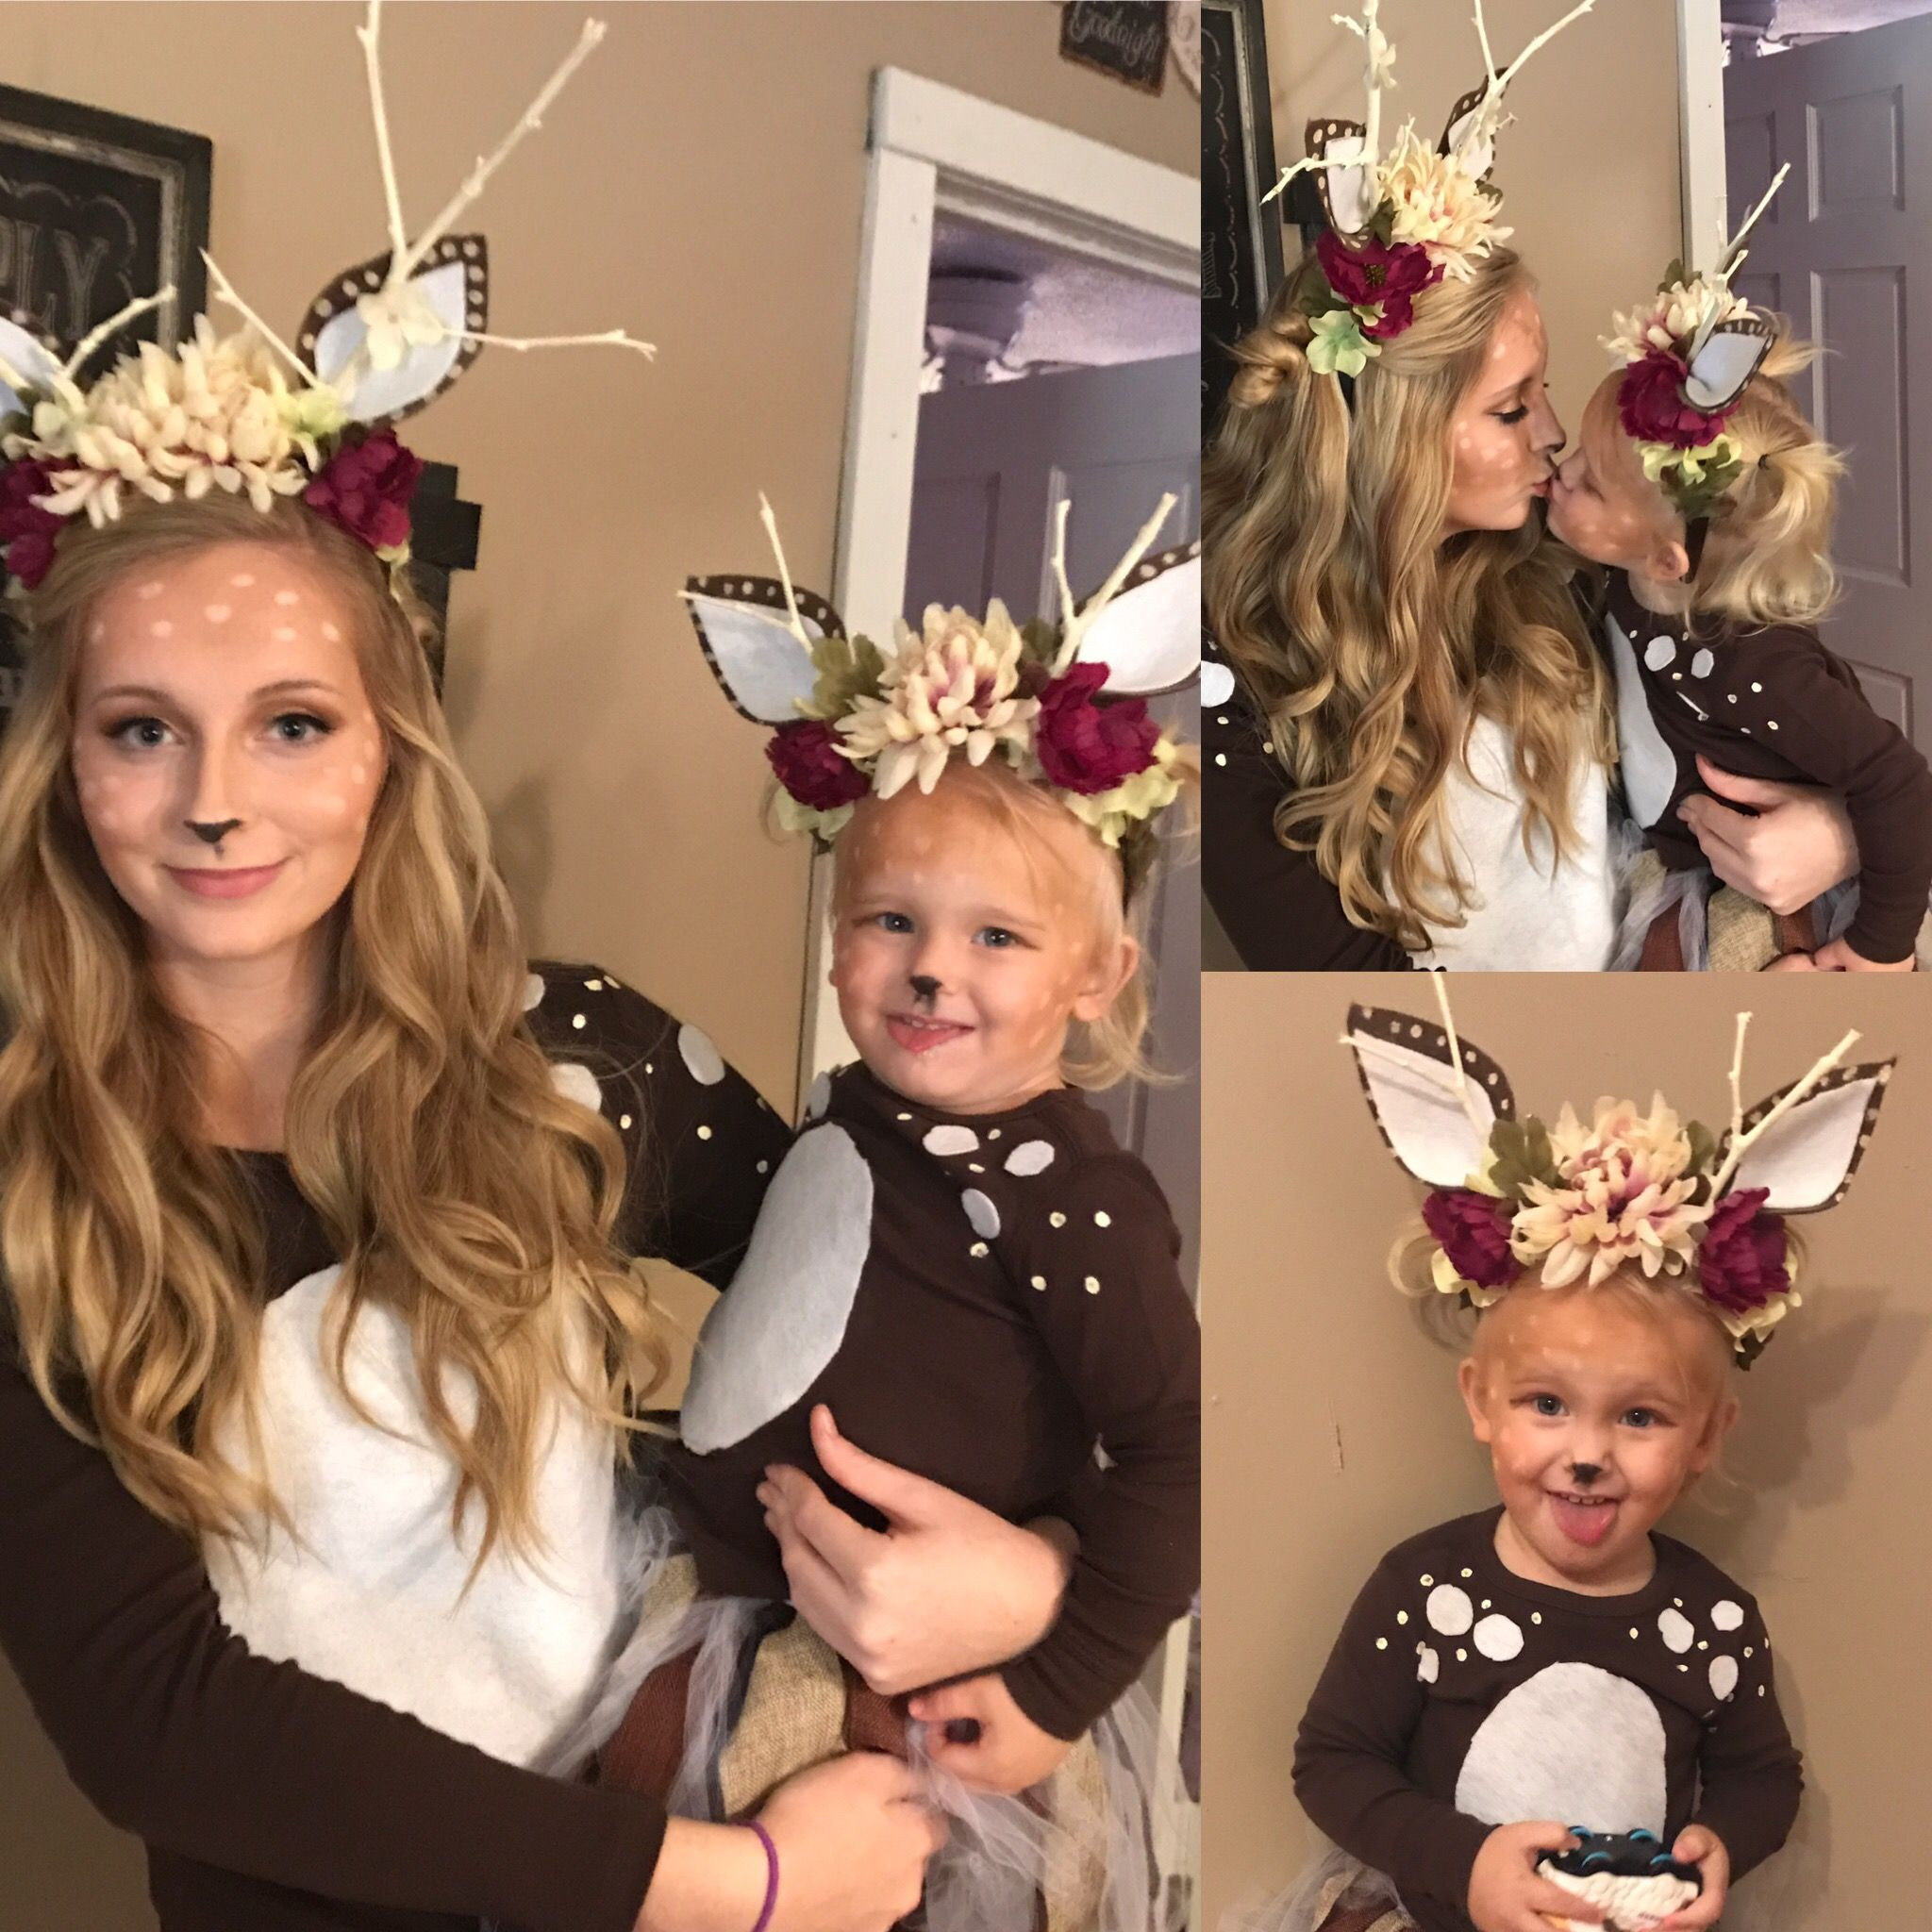 Toddler Deer Costume DIY
 diy deer costume mommy & me toddler deer costume idea